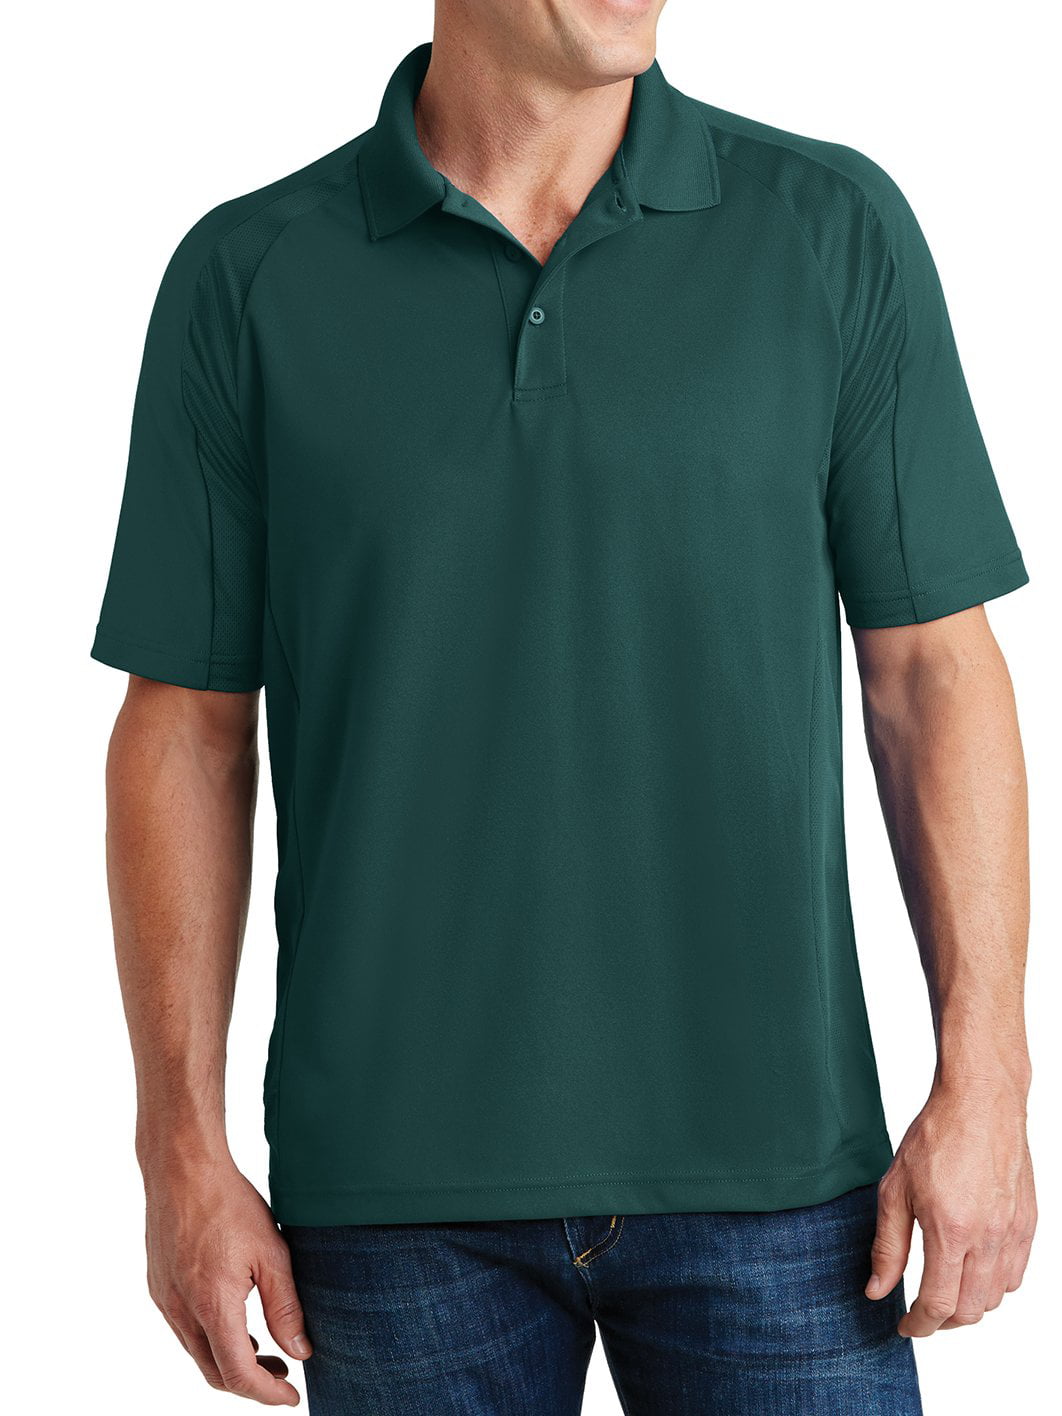 polo shirt dark green